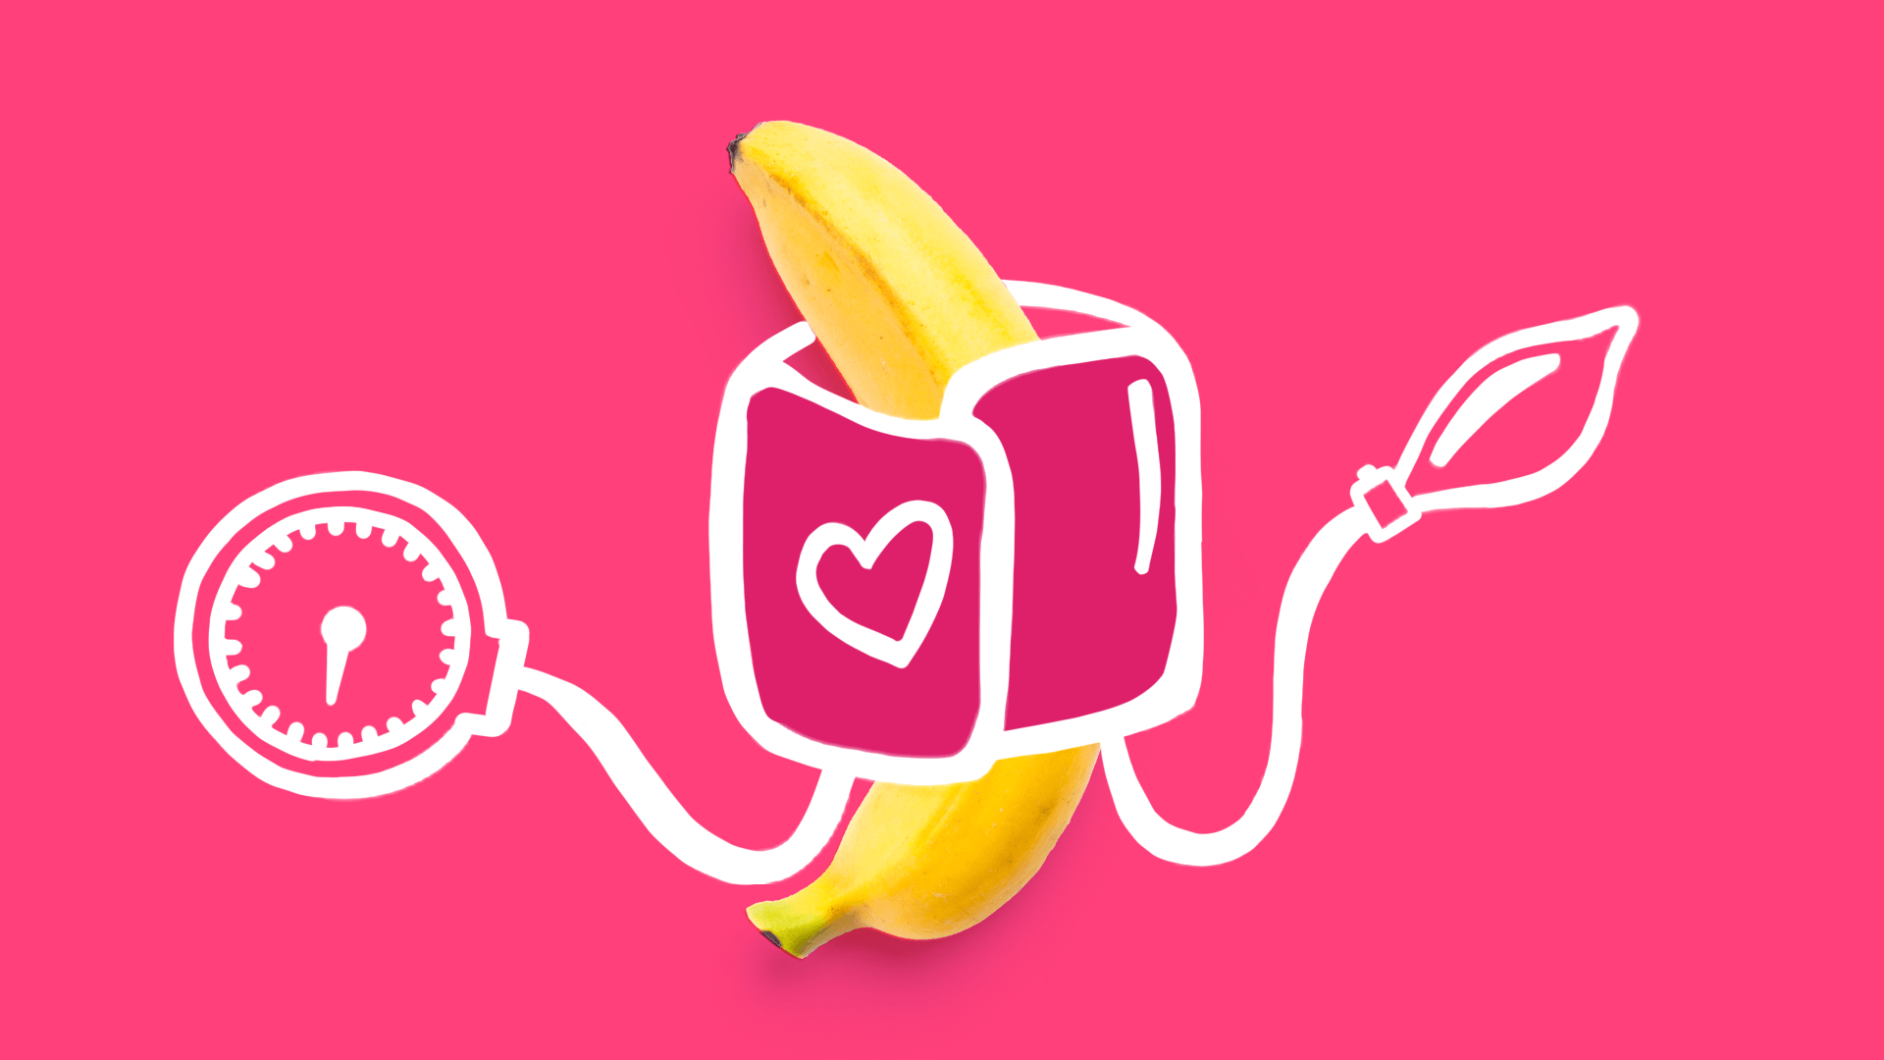 A banana and a cuff represent potassium and blood pressure